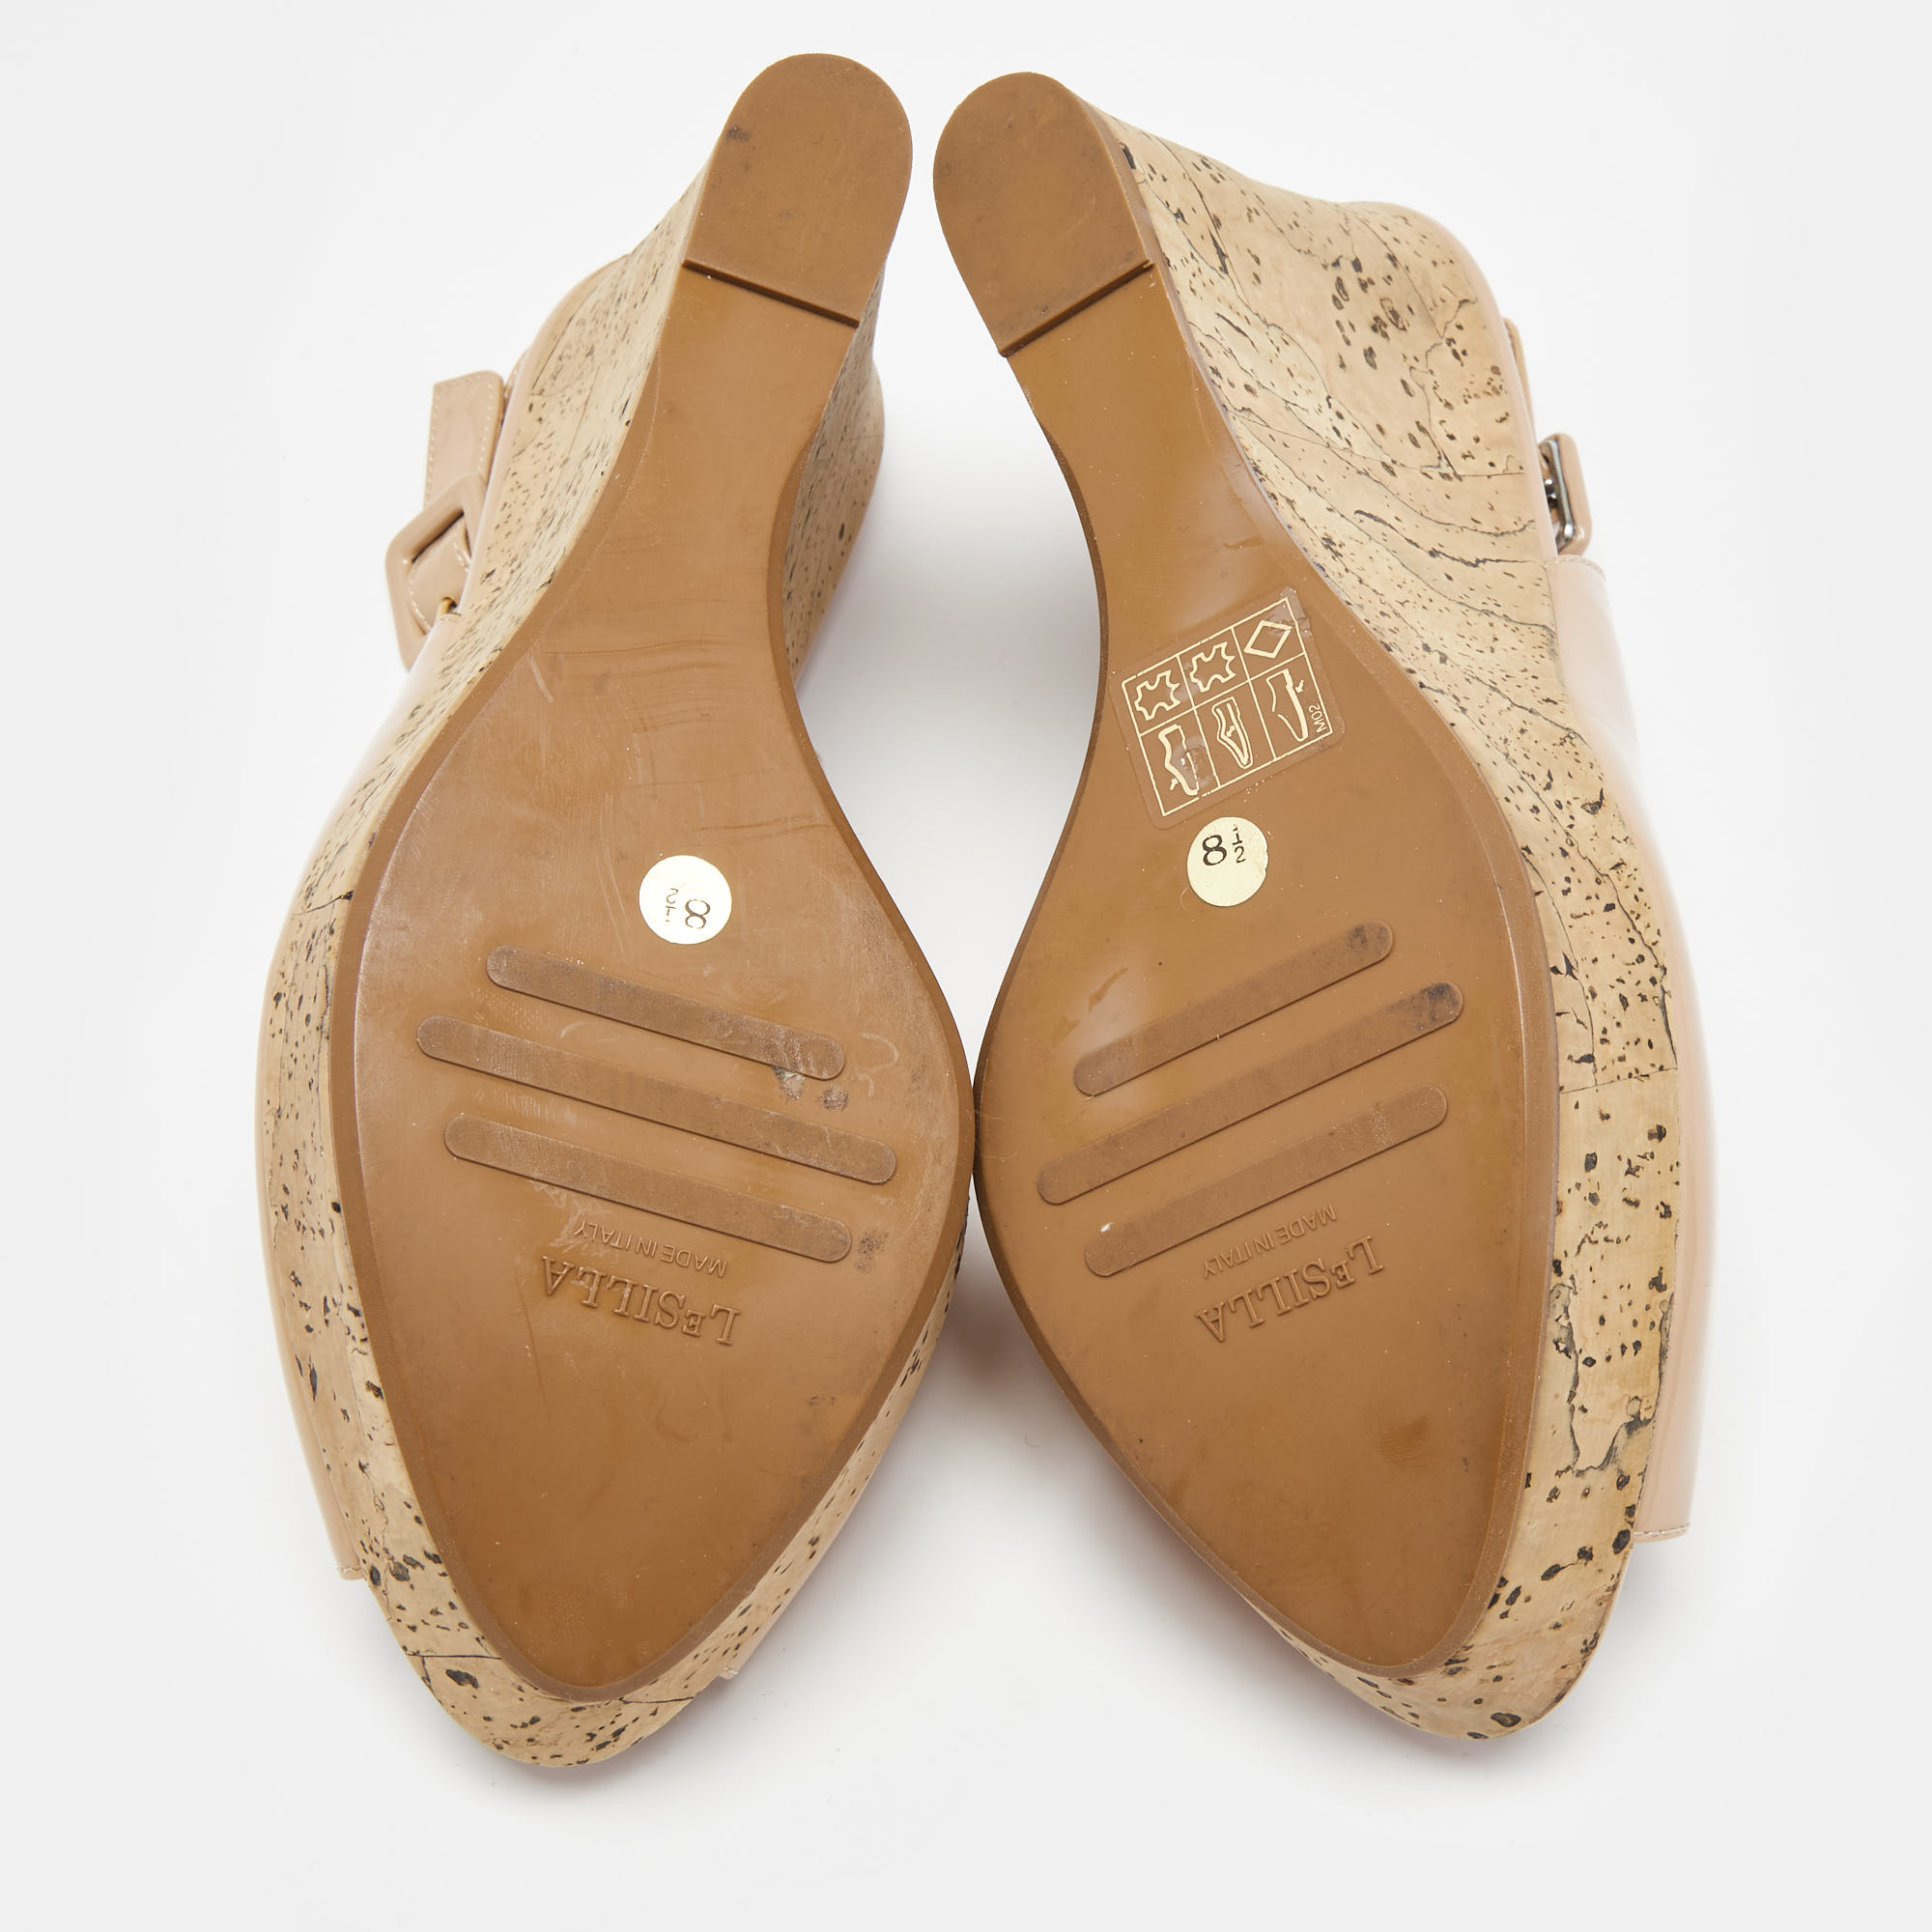 Le Silla Beige Patent Leather Cork Wedge Peep Toe Slingback Sandals Size 39